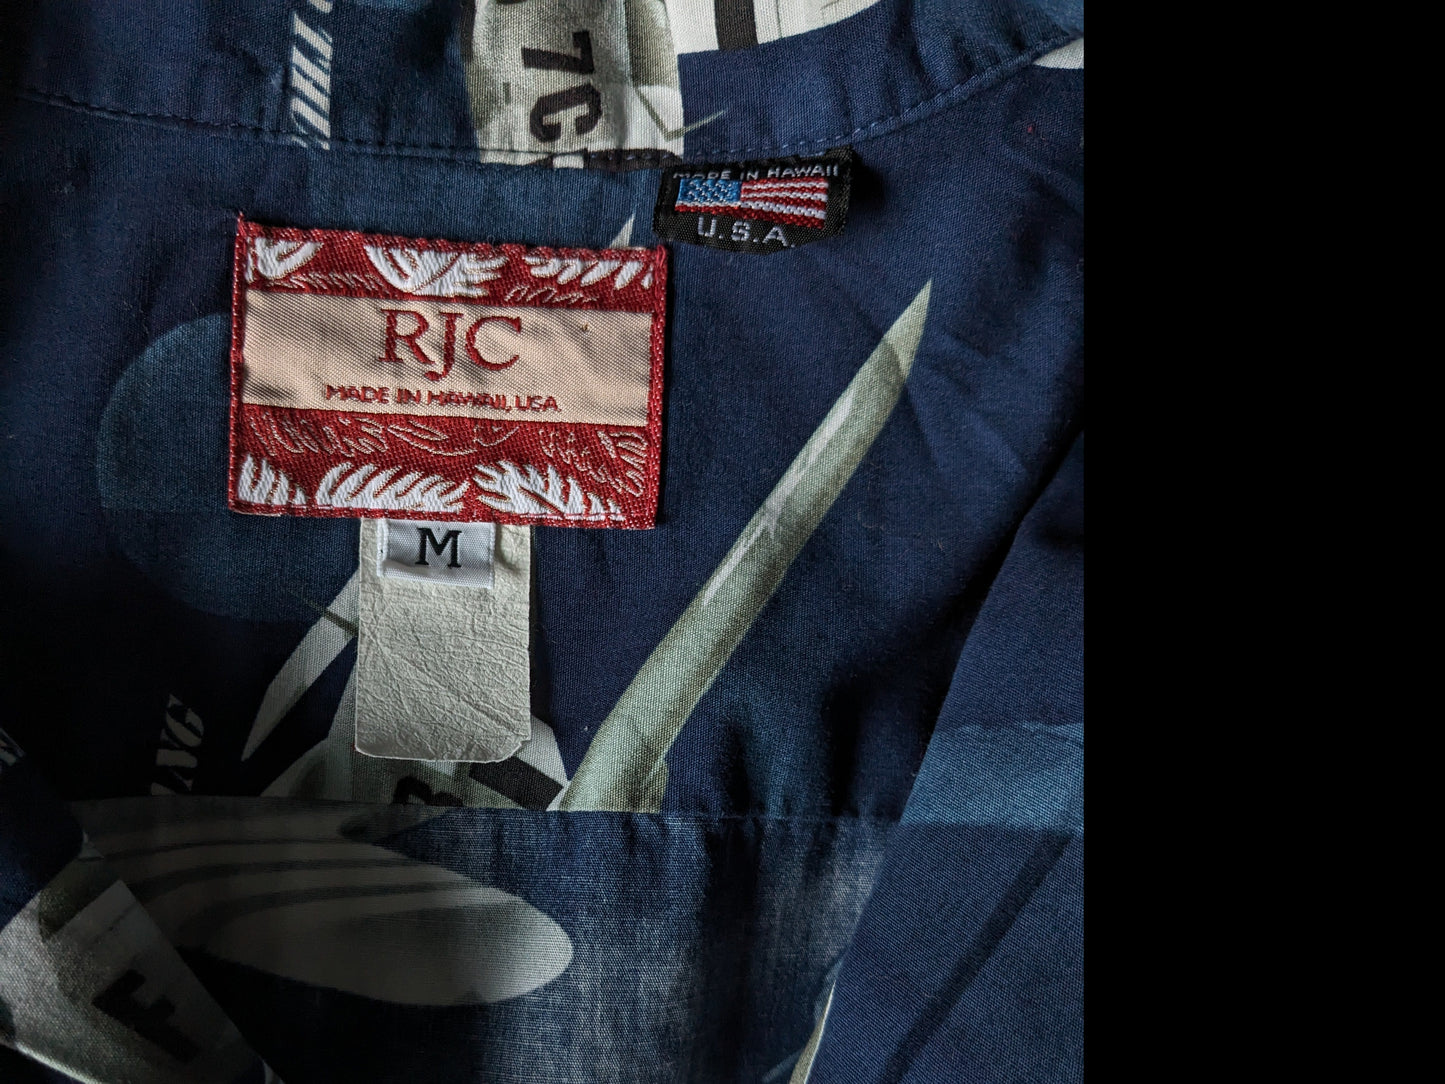 RJC Original Hawaii Shirt Short Sleeve. Blue green white print. Size M. Made in Hawaii.